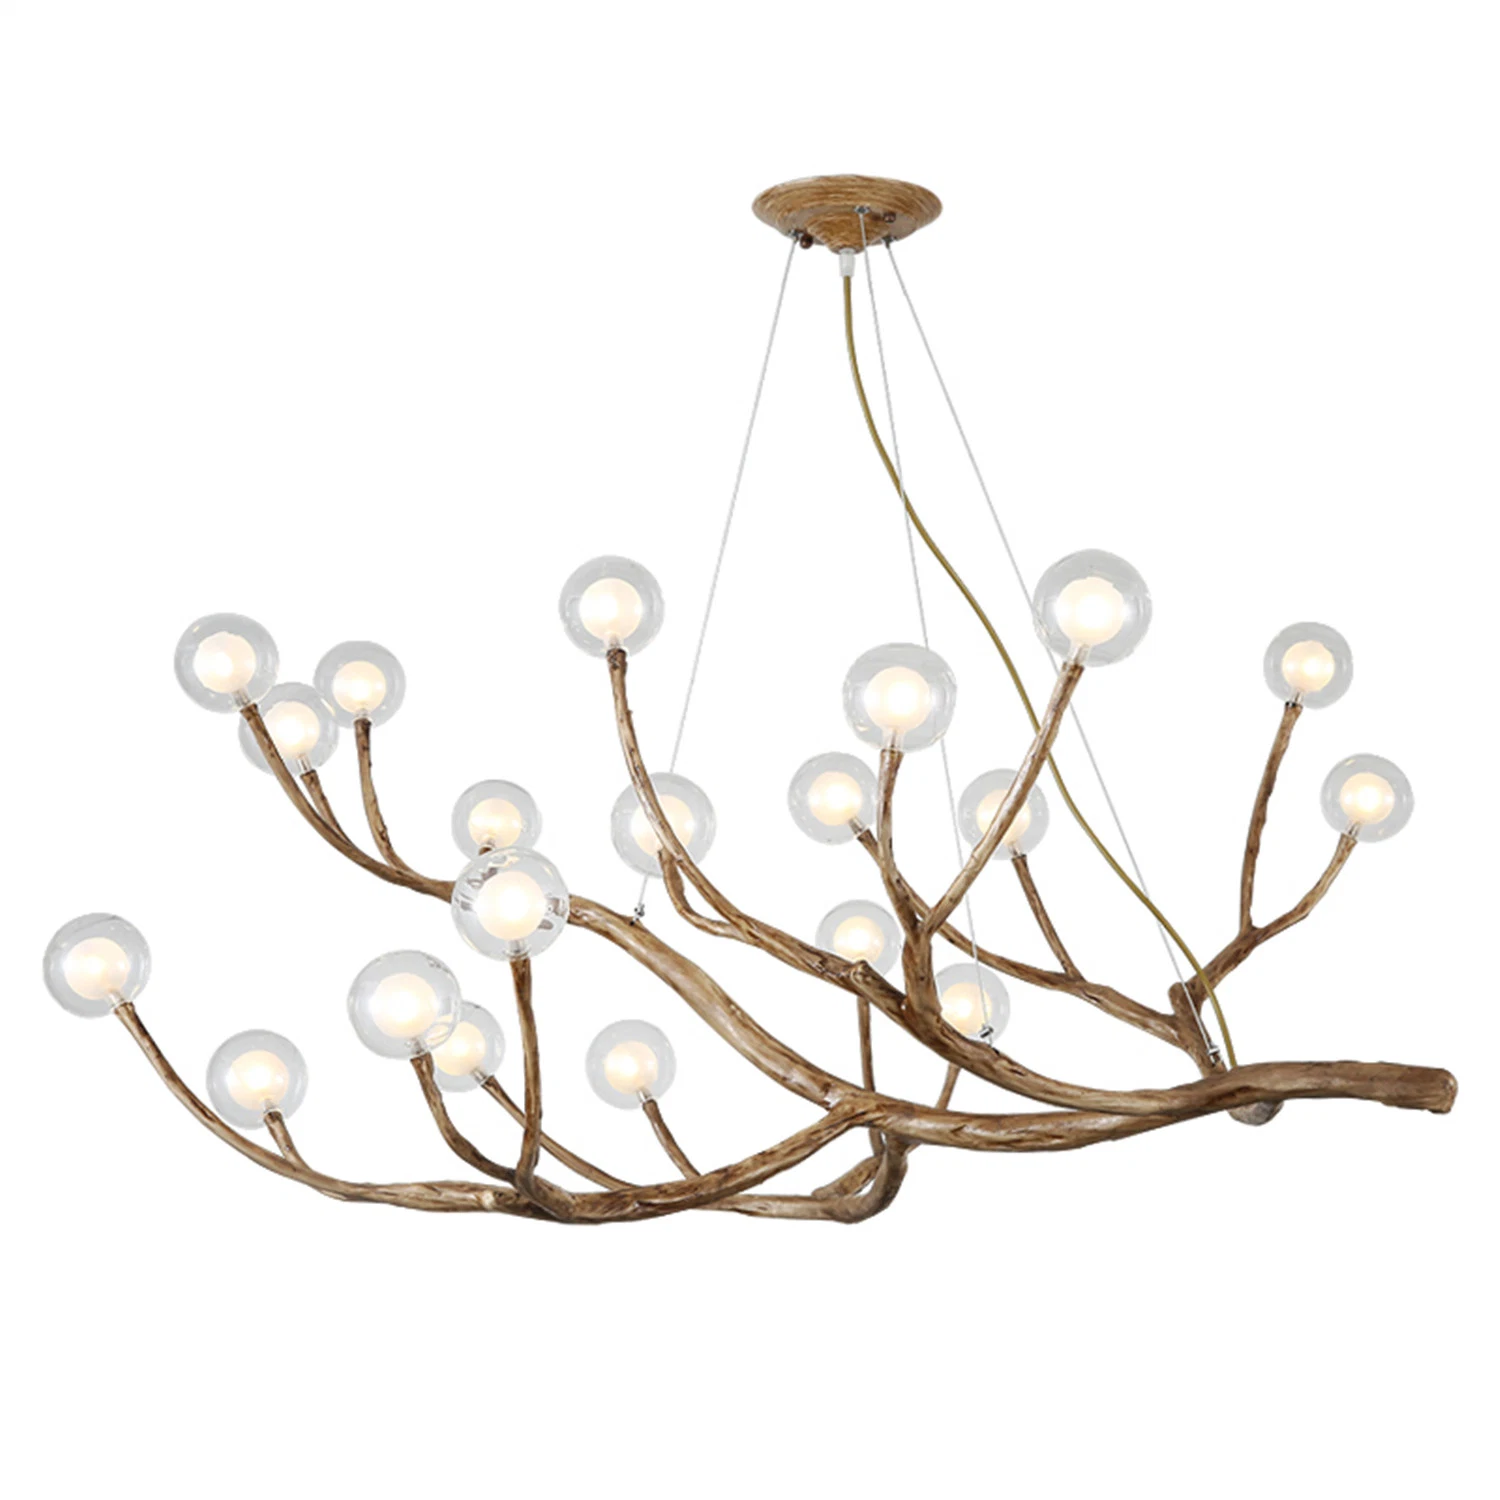 Wooden Tree Branch Decorative Lustre Pendant Home Chandelier Lighting (WH-CI-107)